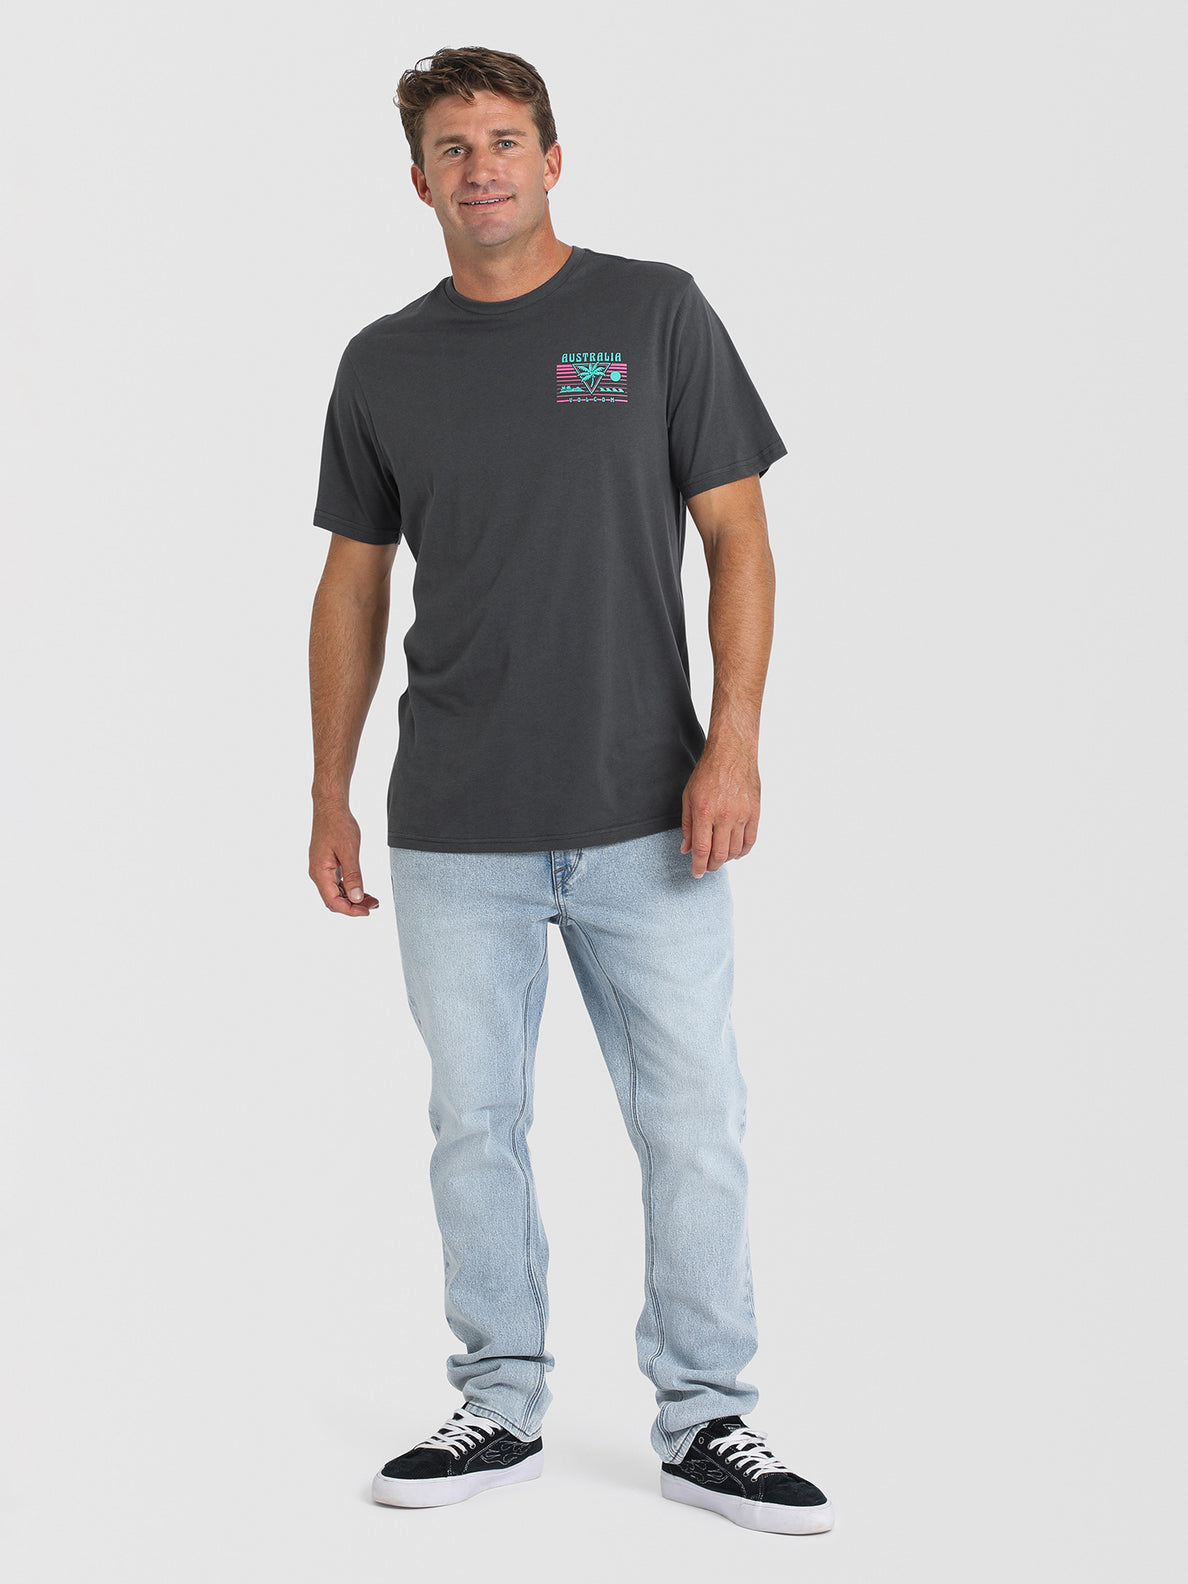 Retrostonez Short Sleeve T-Shirt - Asphalt Black